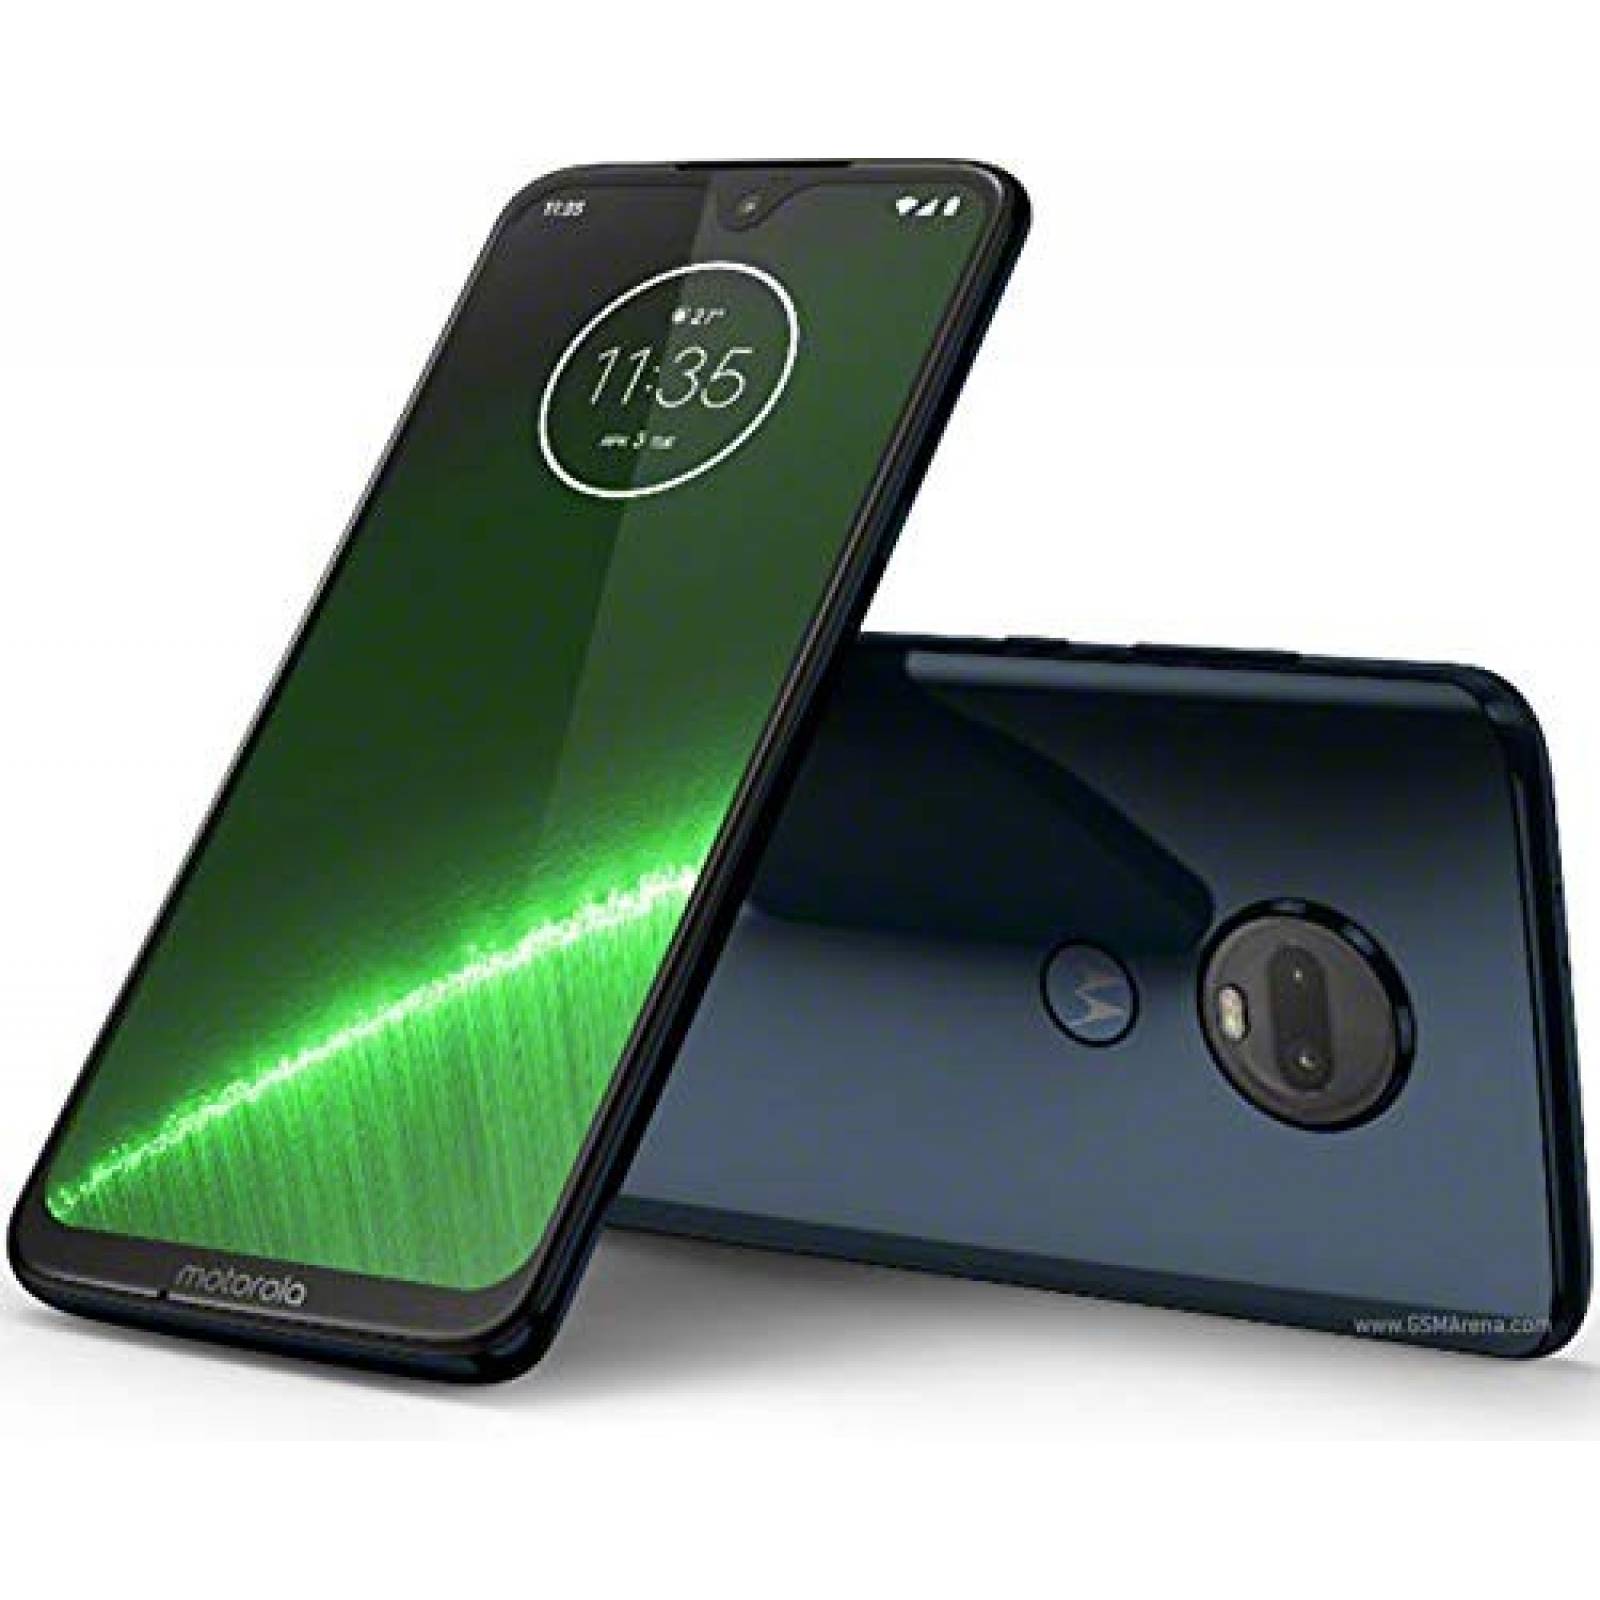 Teléfono celular Motorola G7+Plus 6.2'' 64GB desbloq -Índigo